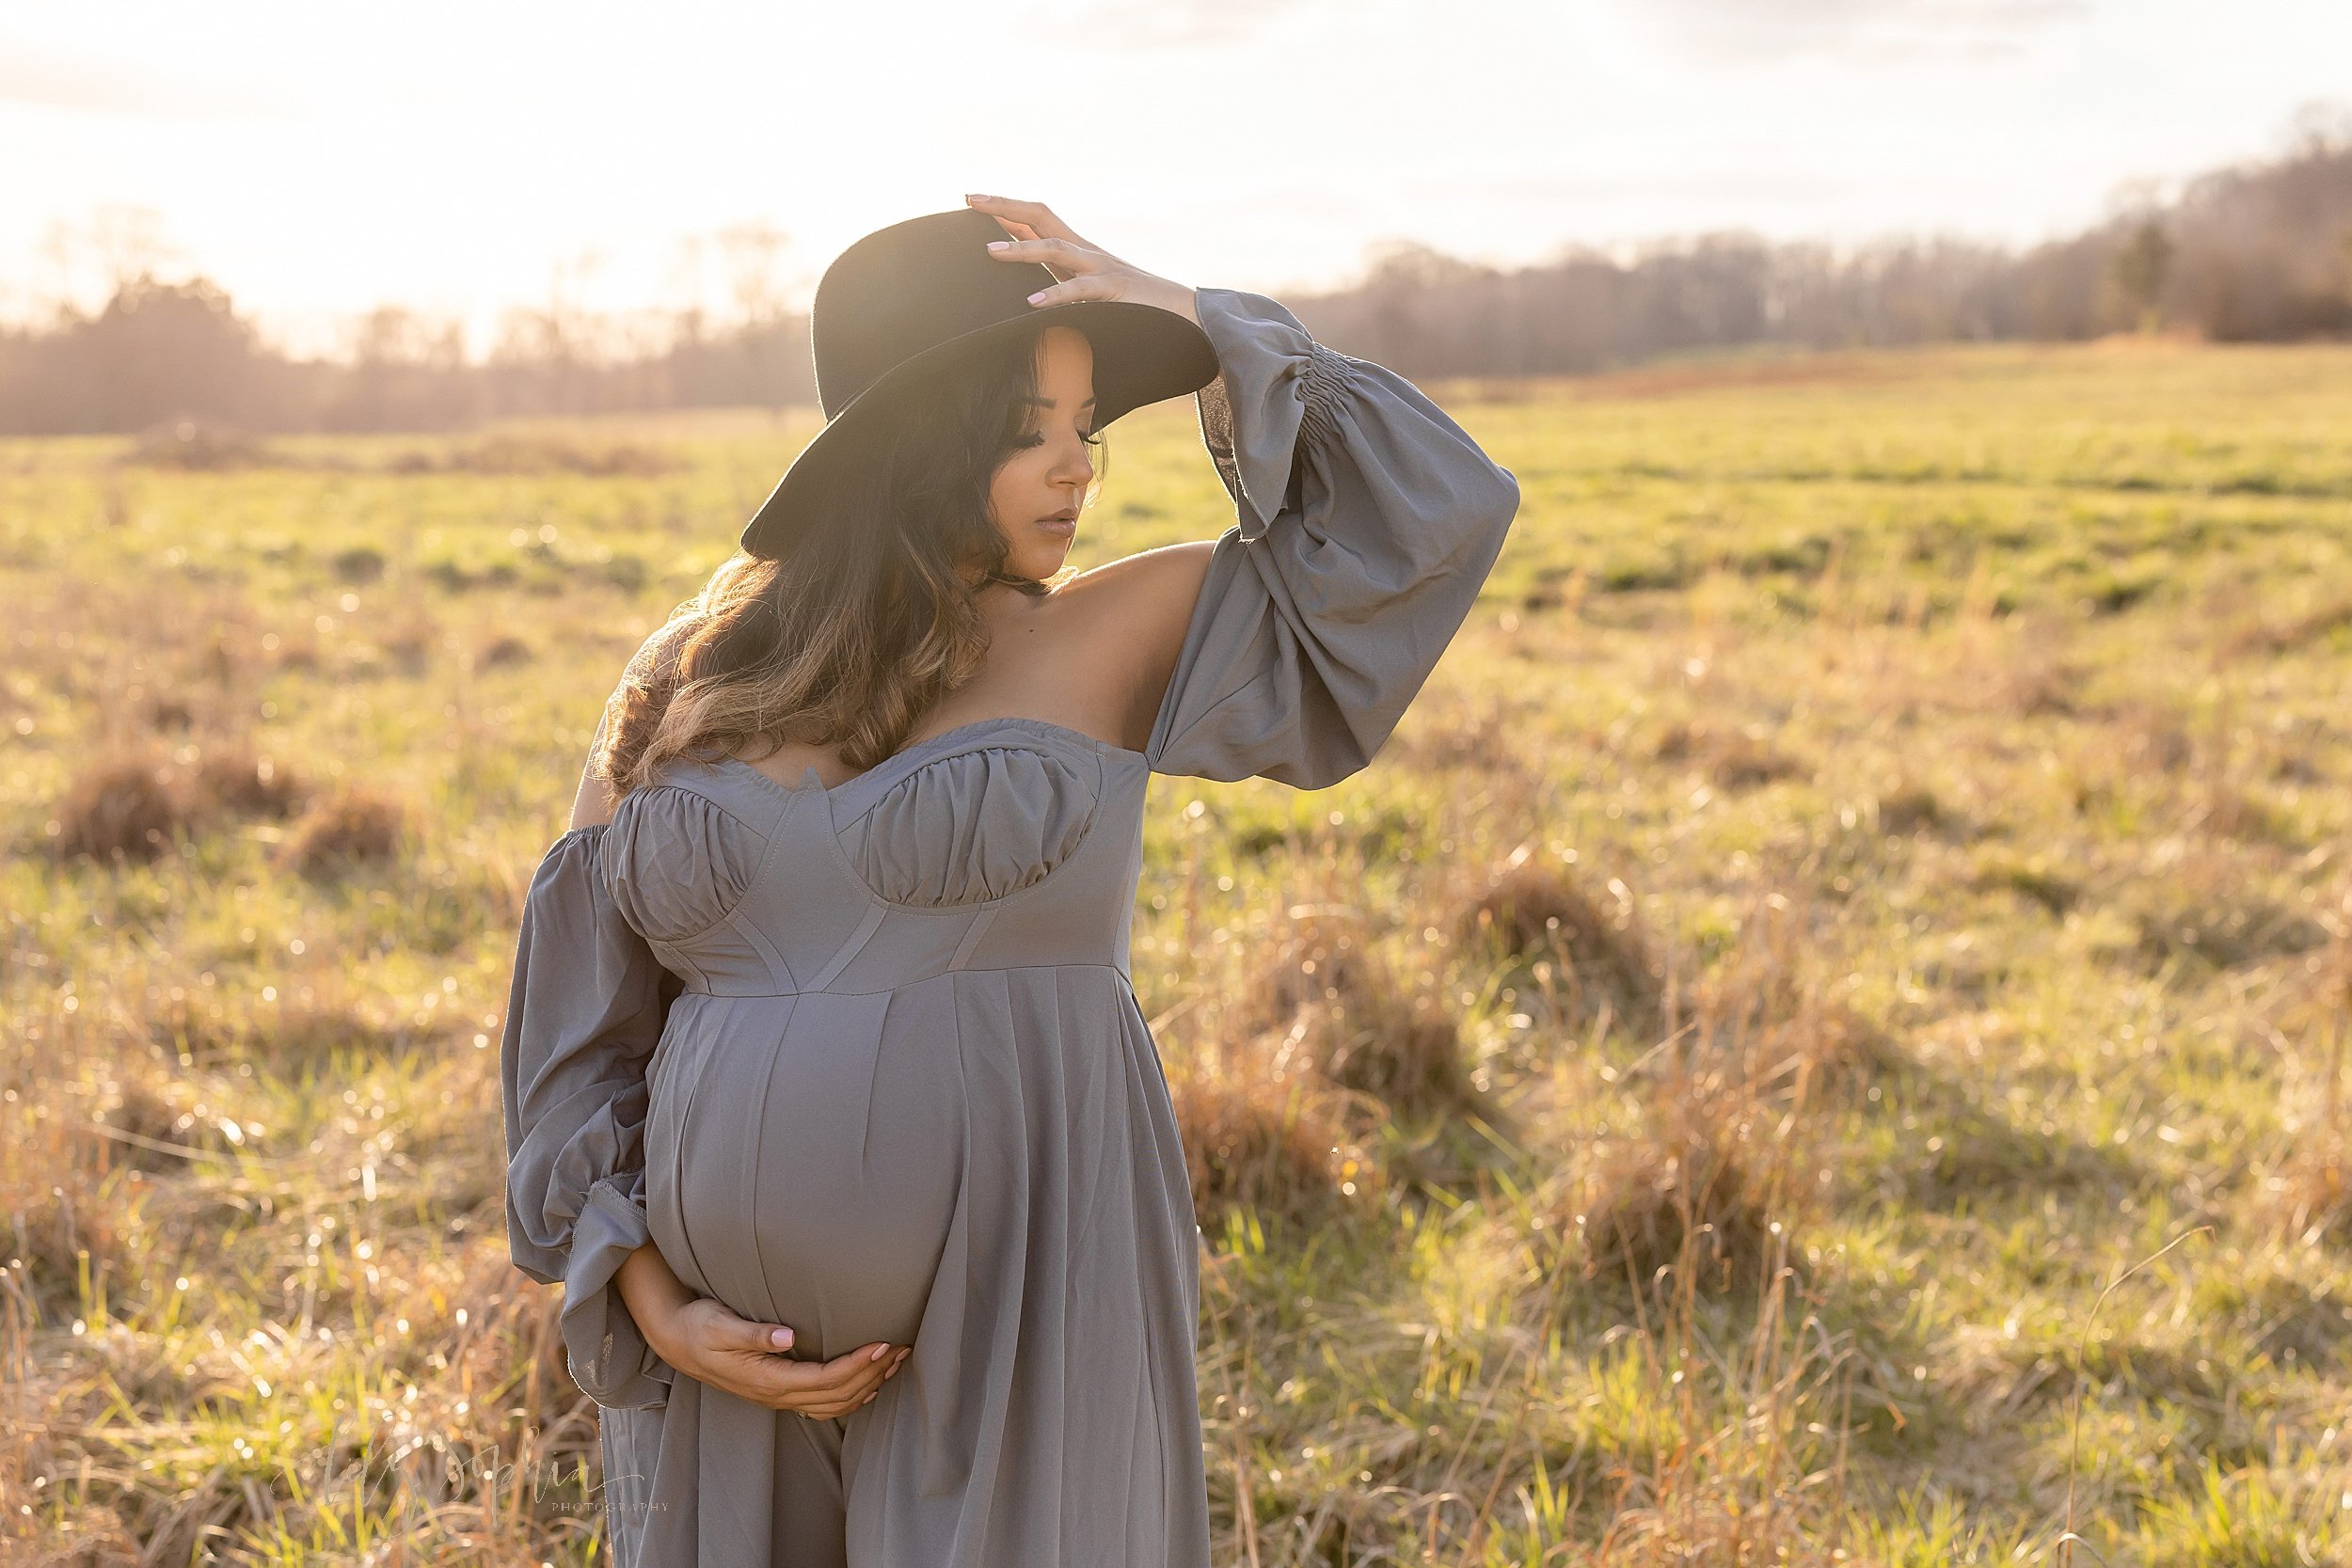 atlanta-pregnancy-photos-expecting-baby-girl-maternity-photoshoot-lawrenceville-oakhurst-decatur-kirkwood--brookhaven-buckhead-smyrna-mableton-midtown-virginia-highlands_8759.jpg